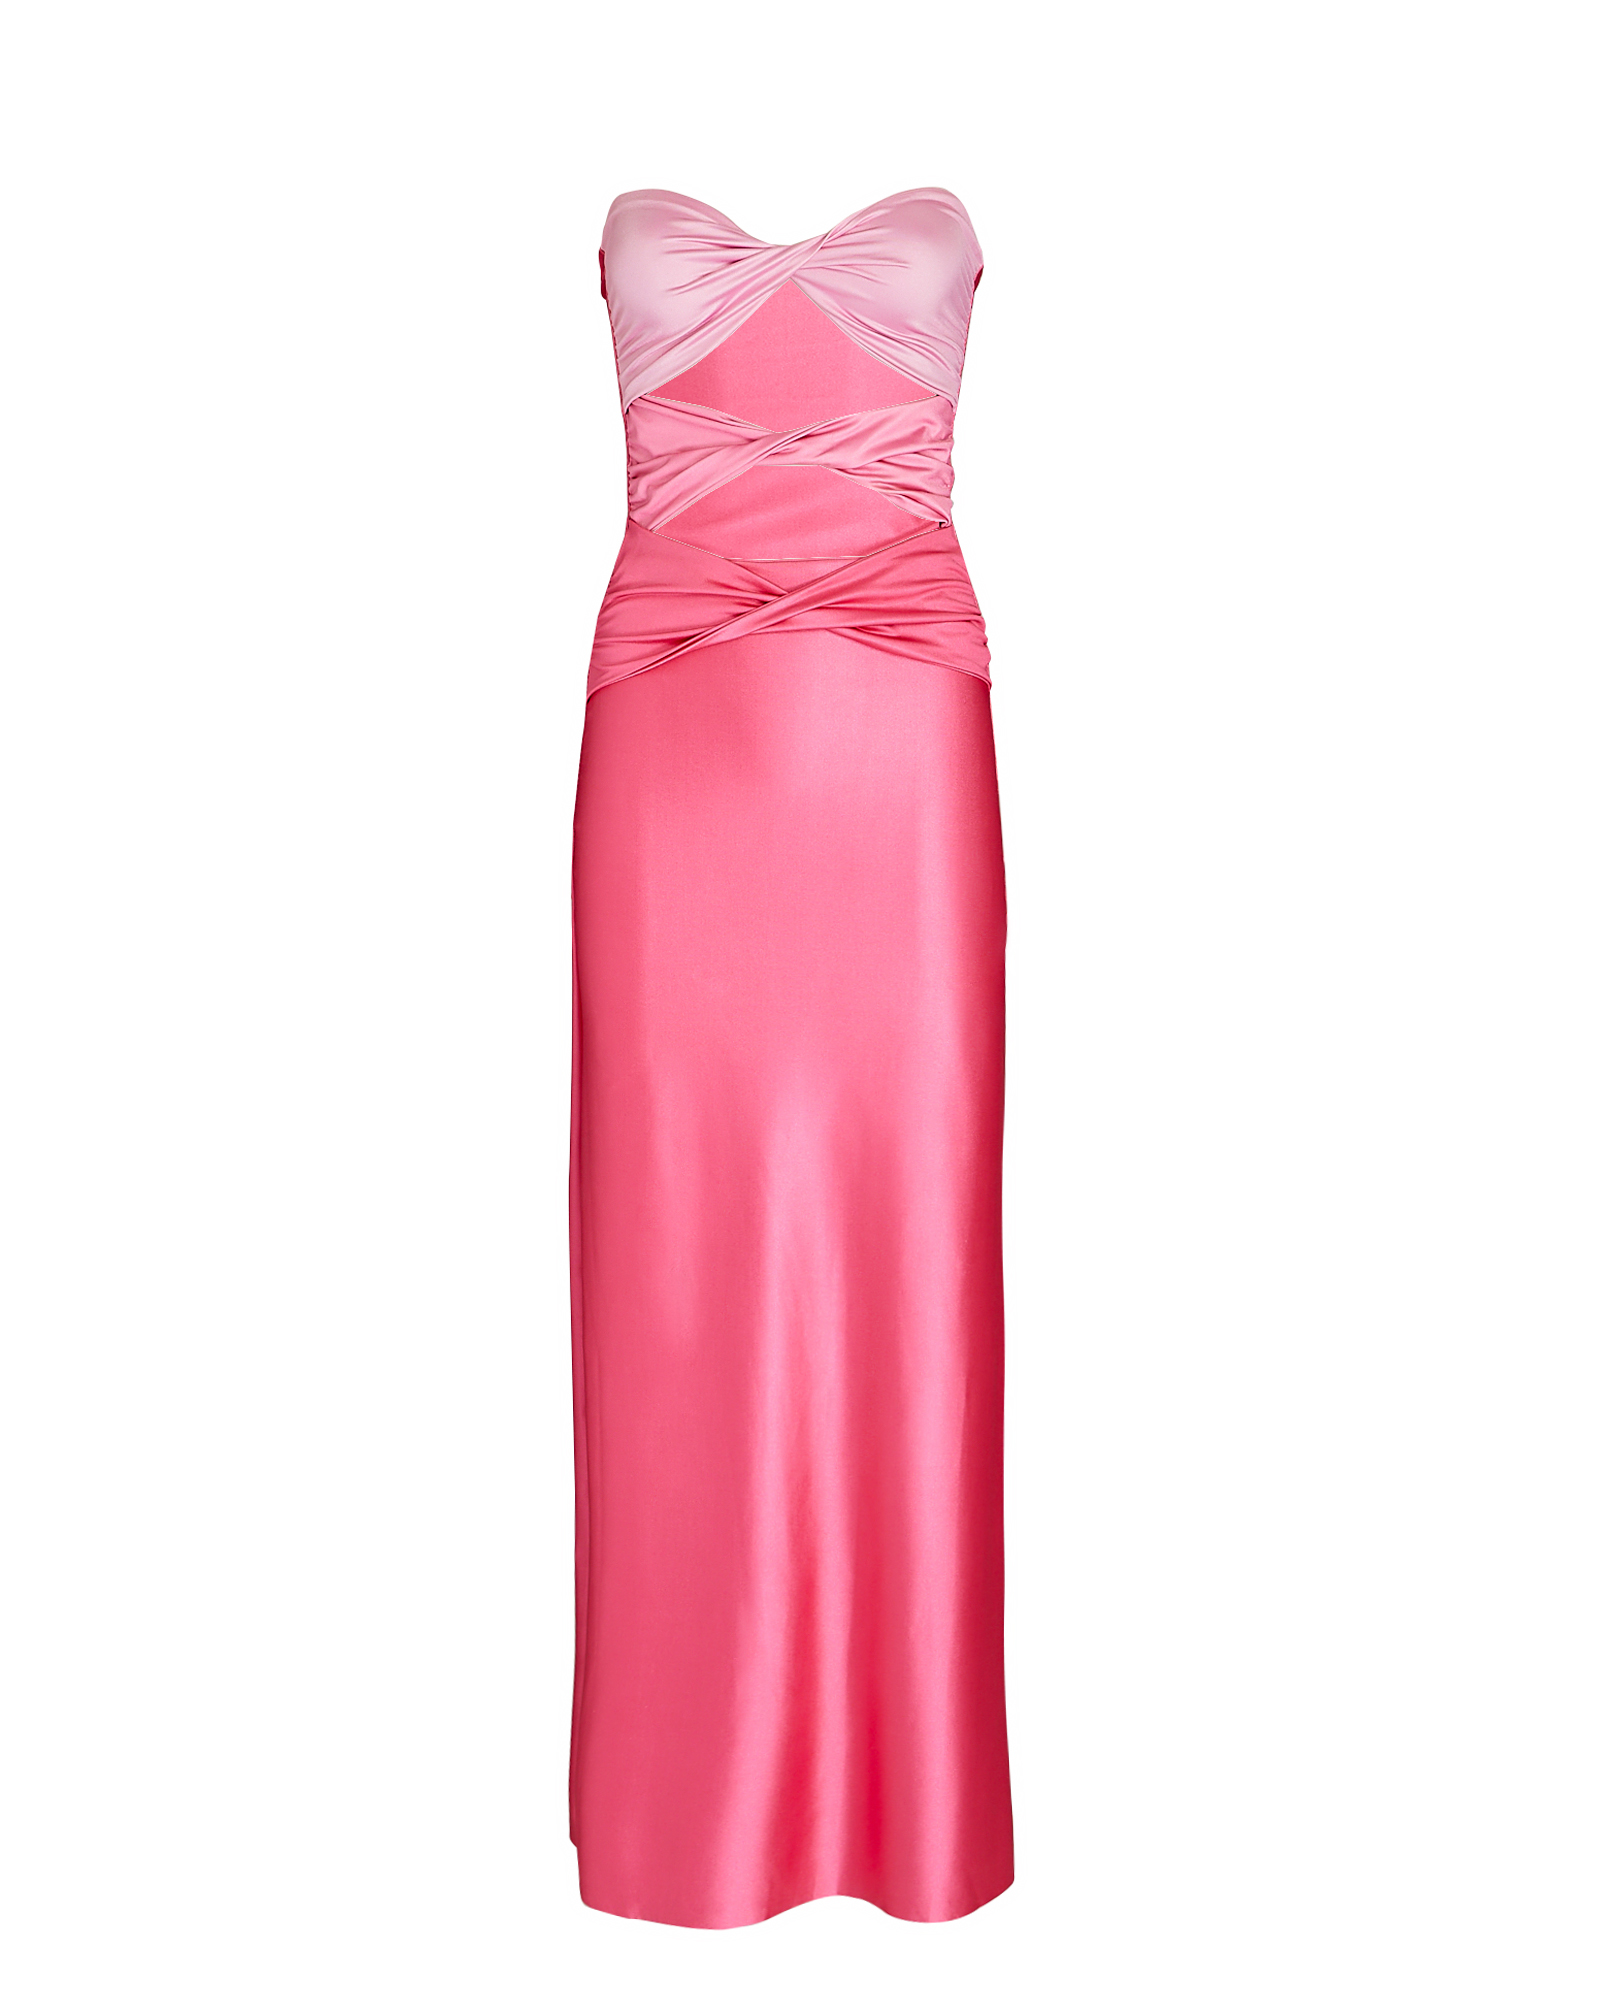 Baobab Ola Straplesss Cut-Out Midi Dress in Pink | INTERMIX®